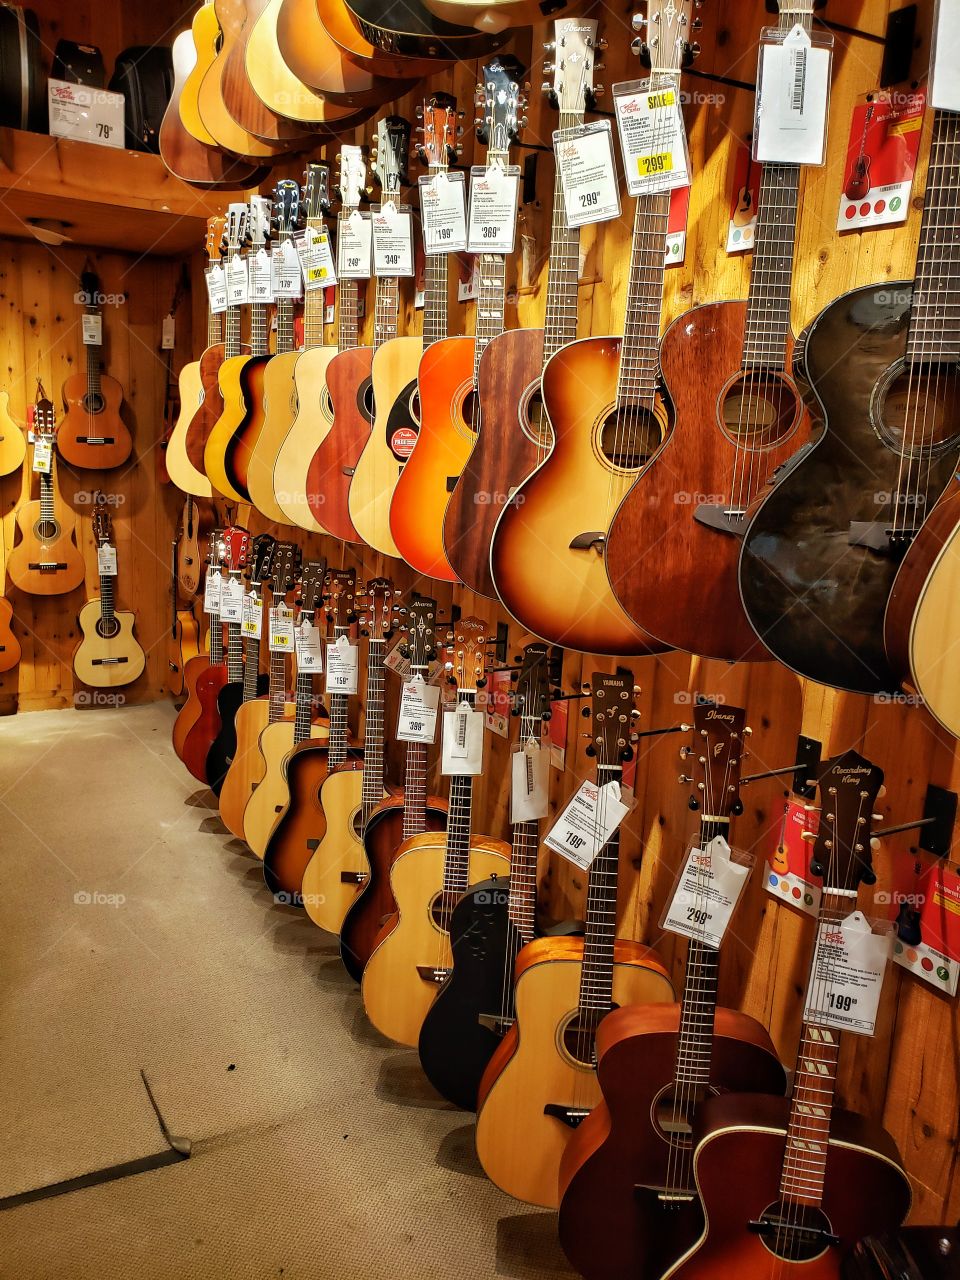 into the guitar shop...